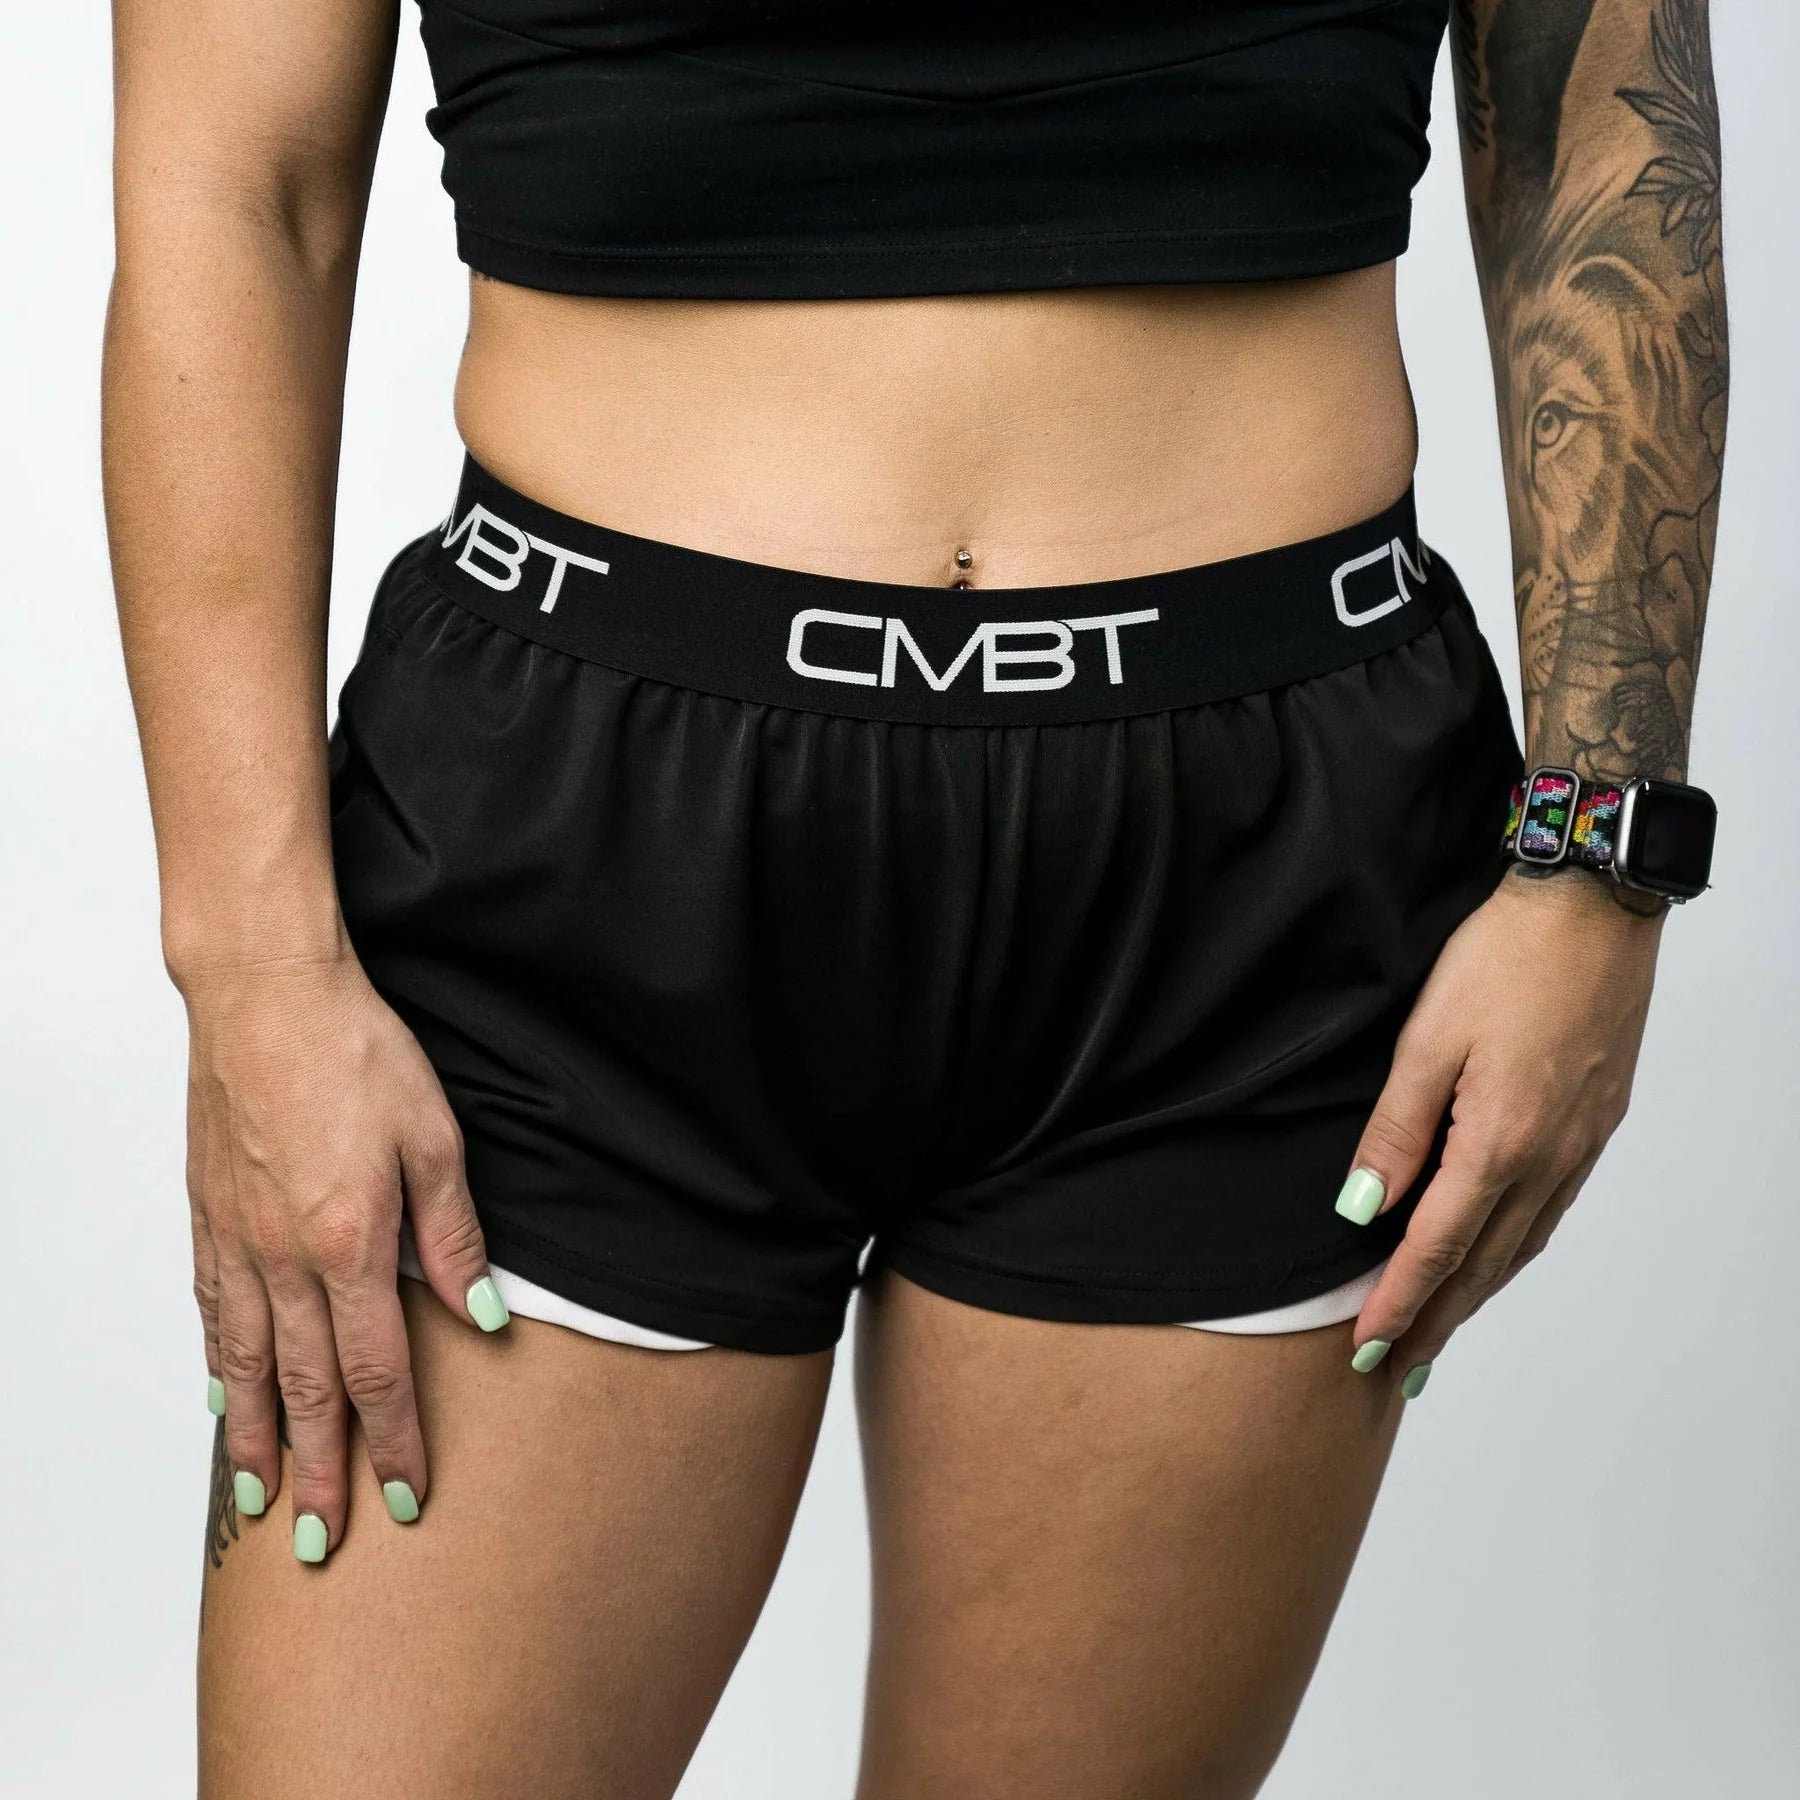 Cmbt Cross Training Shorts